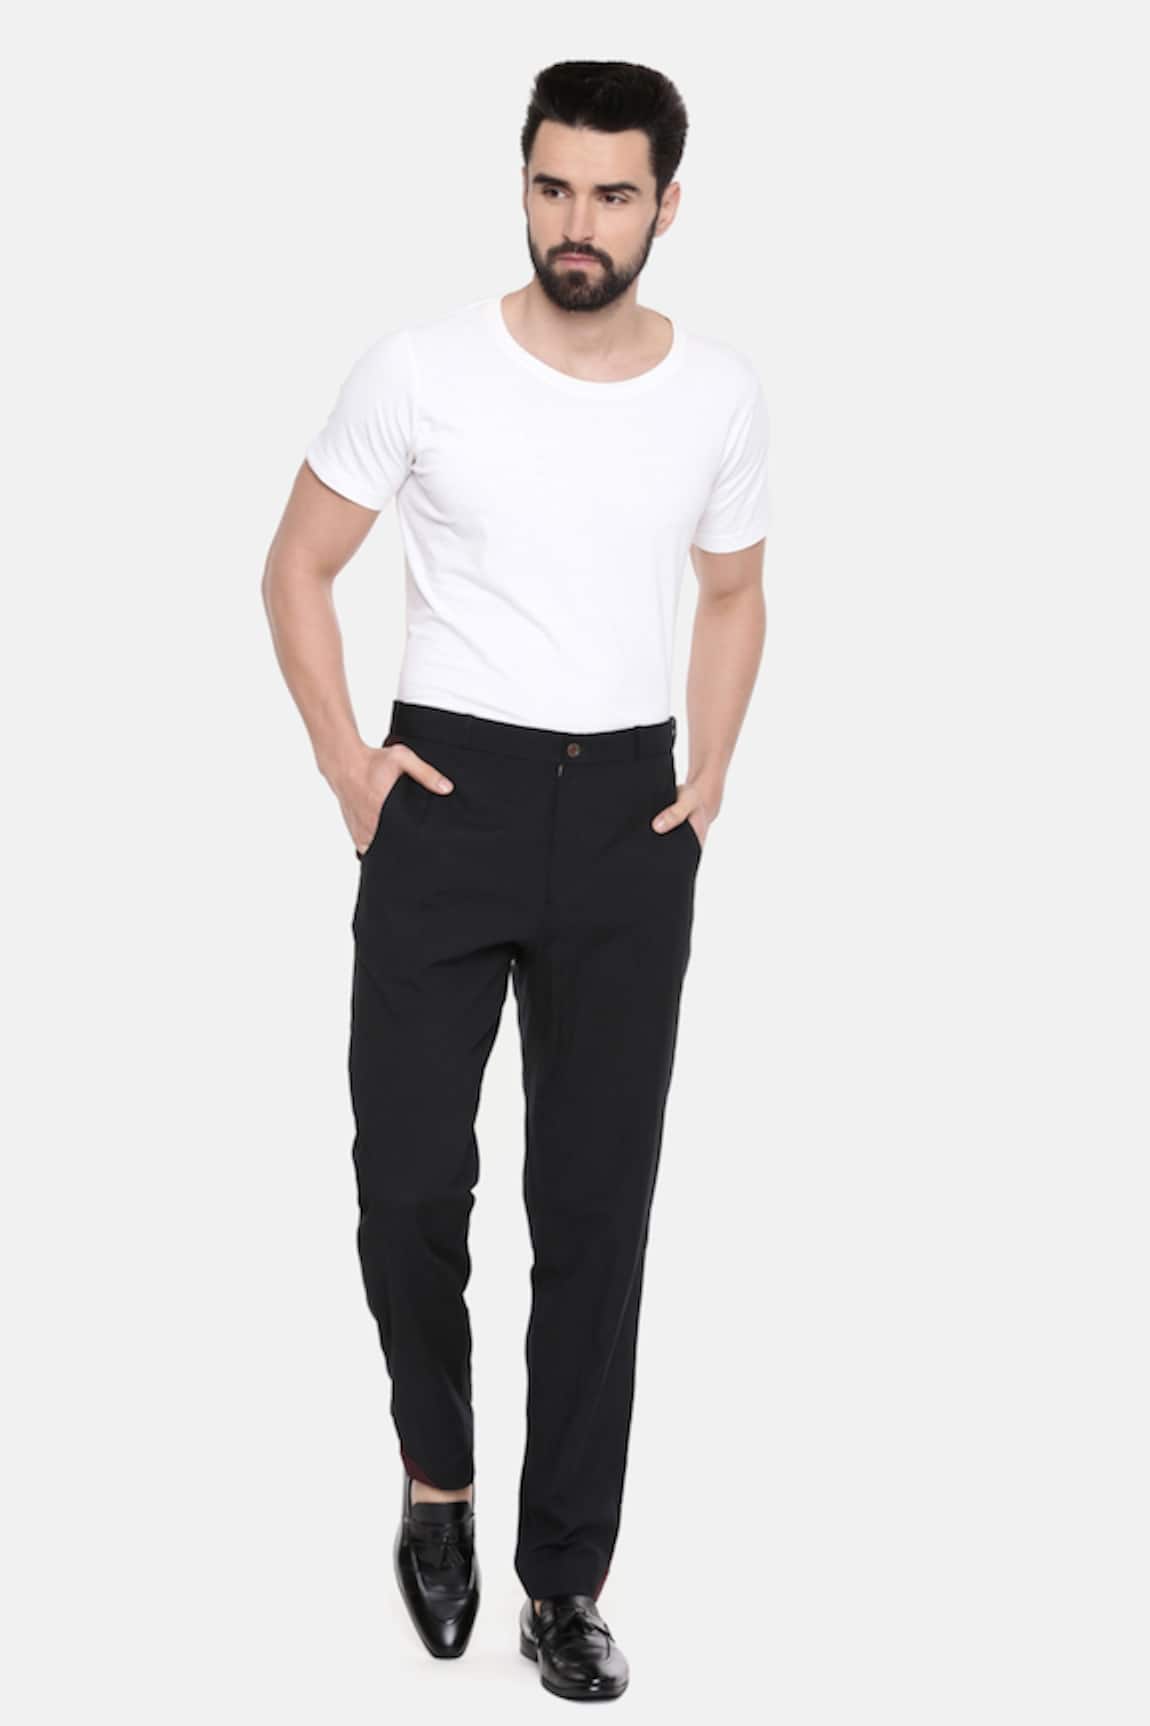 Best Black Shirts Combination Ideas  Black Shirt Matching Pants   TiptopGents